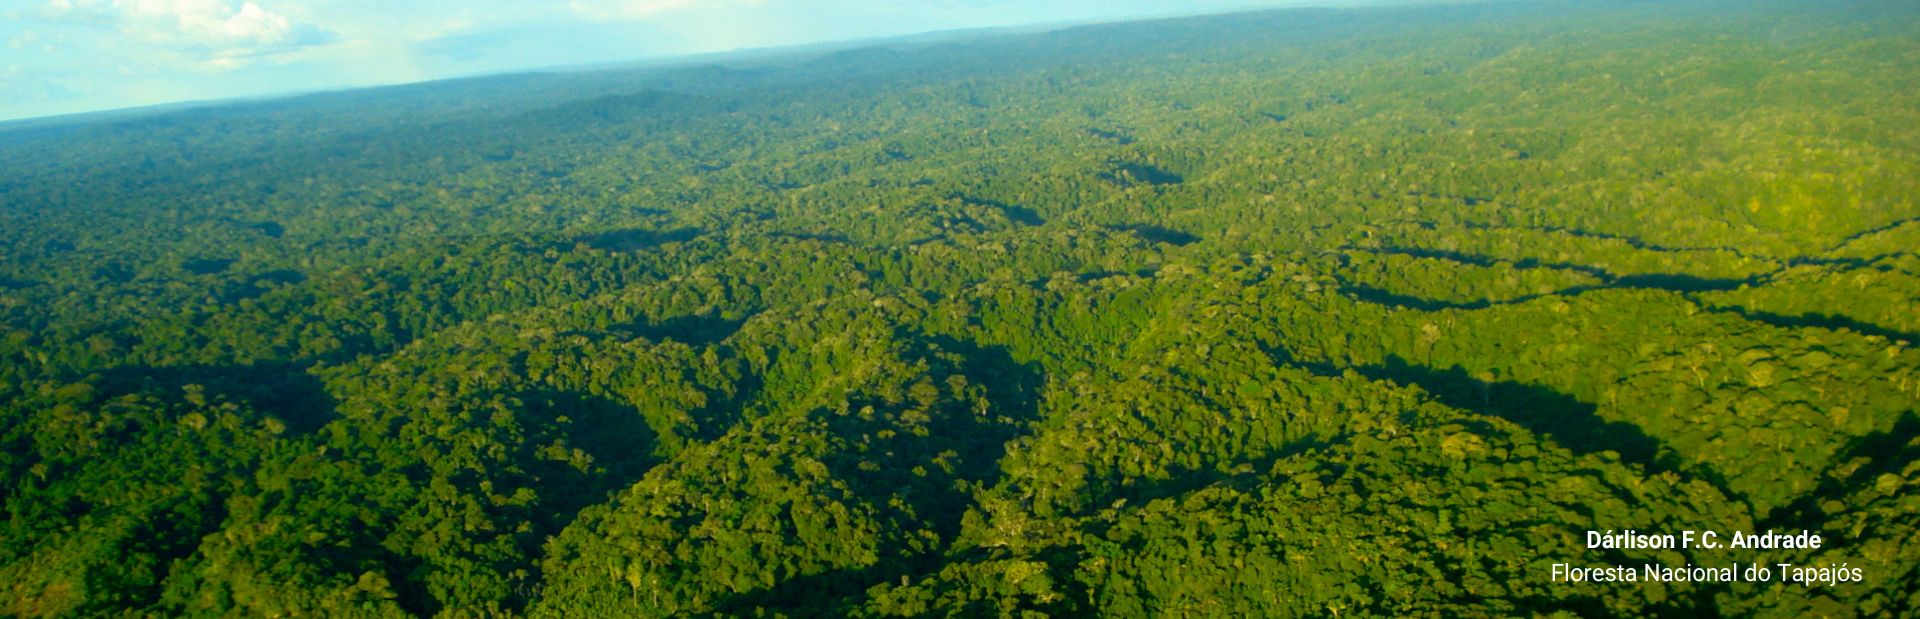 Floresta Nacional do Tapajos